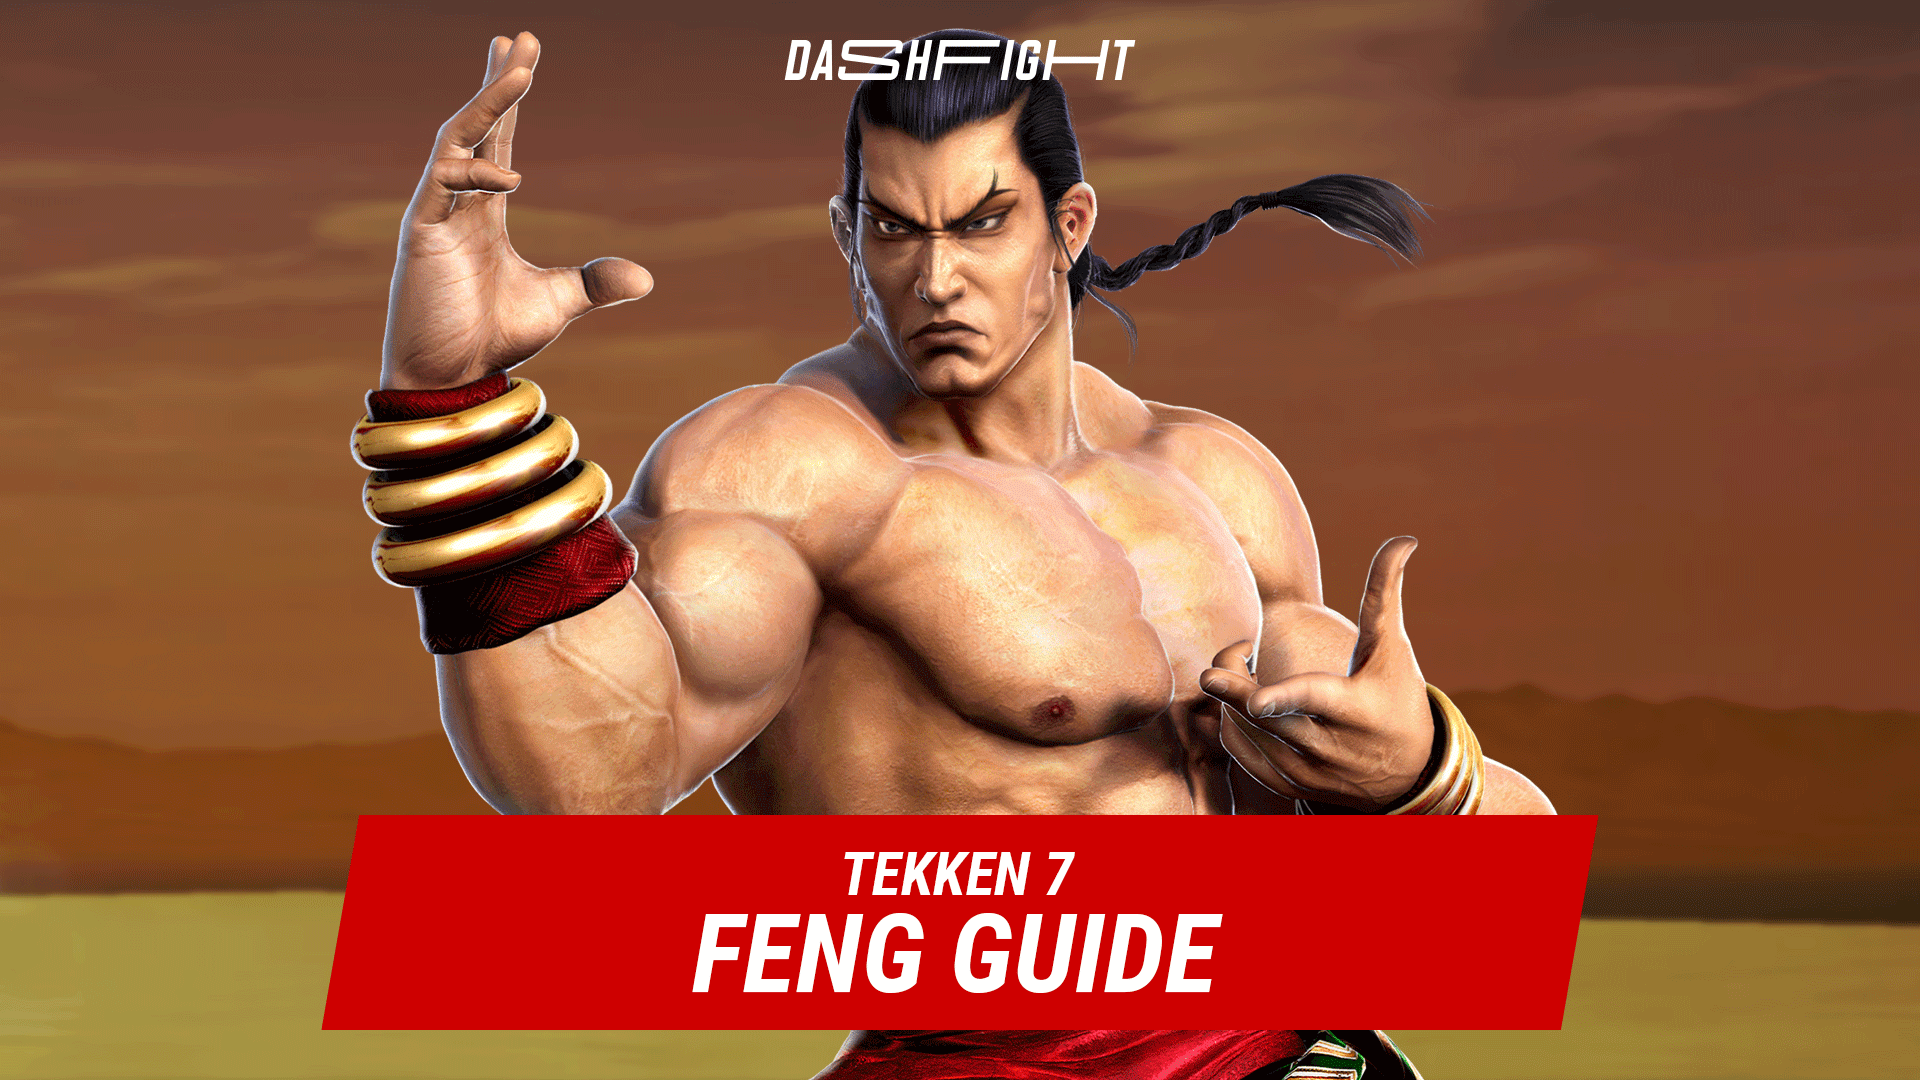 Tekken 7 Course: From Beginner to Advanced Player